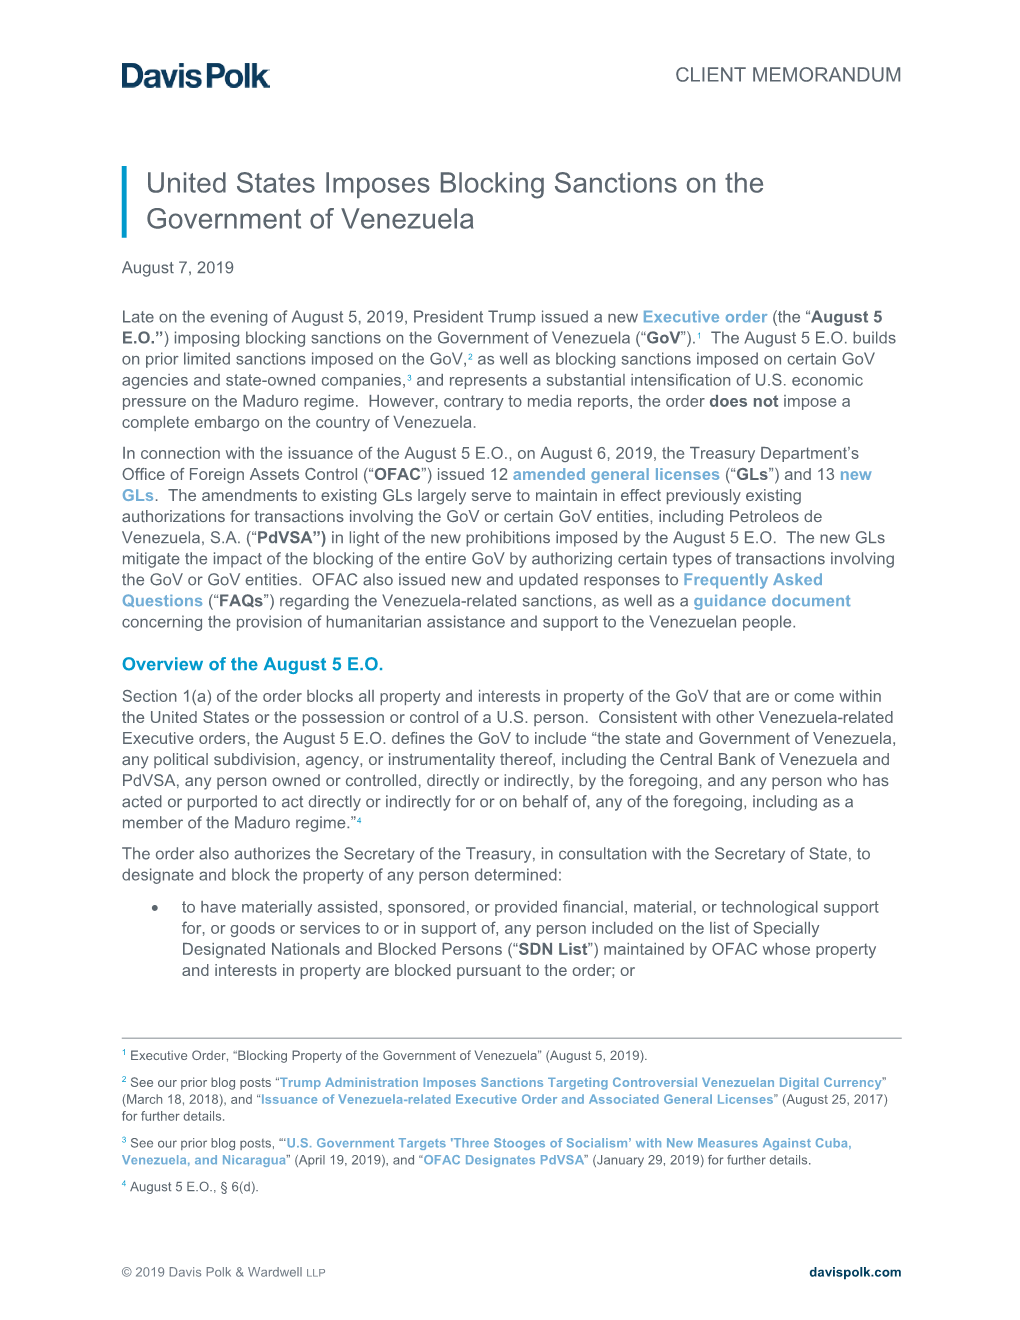 United States Imposes Blocking Sanctions on the Government of Venezuela